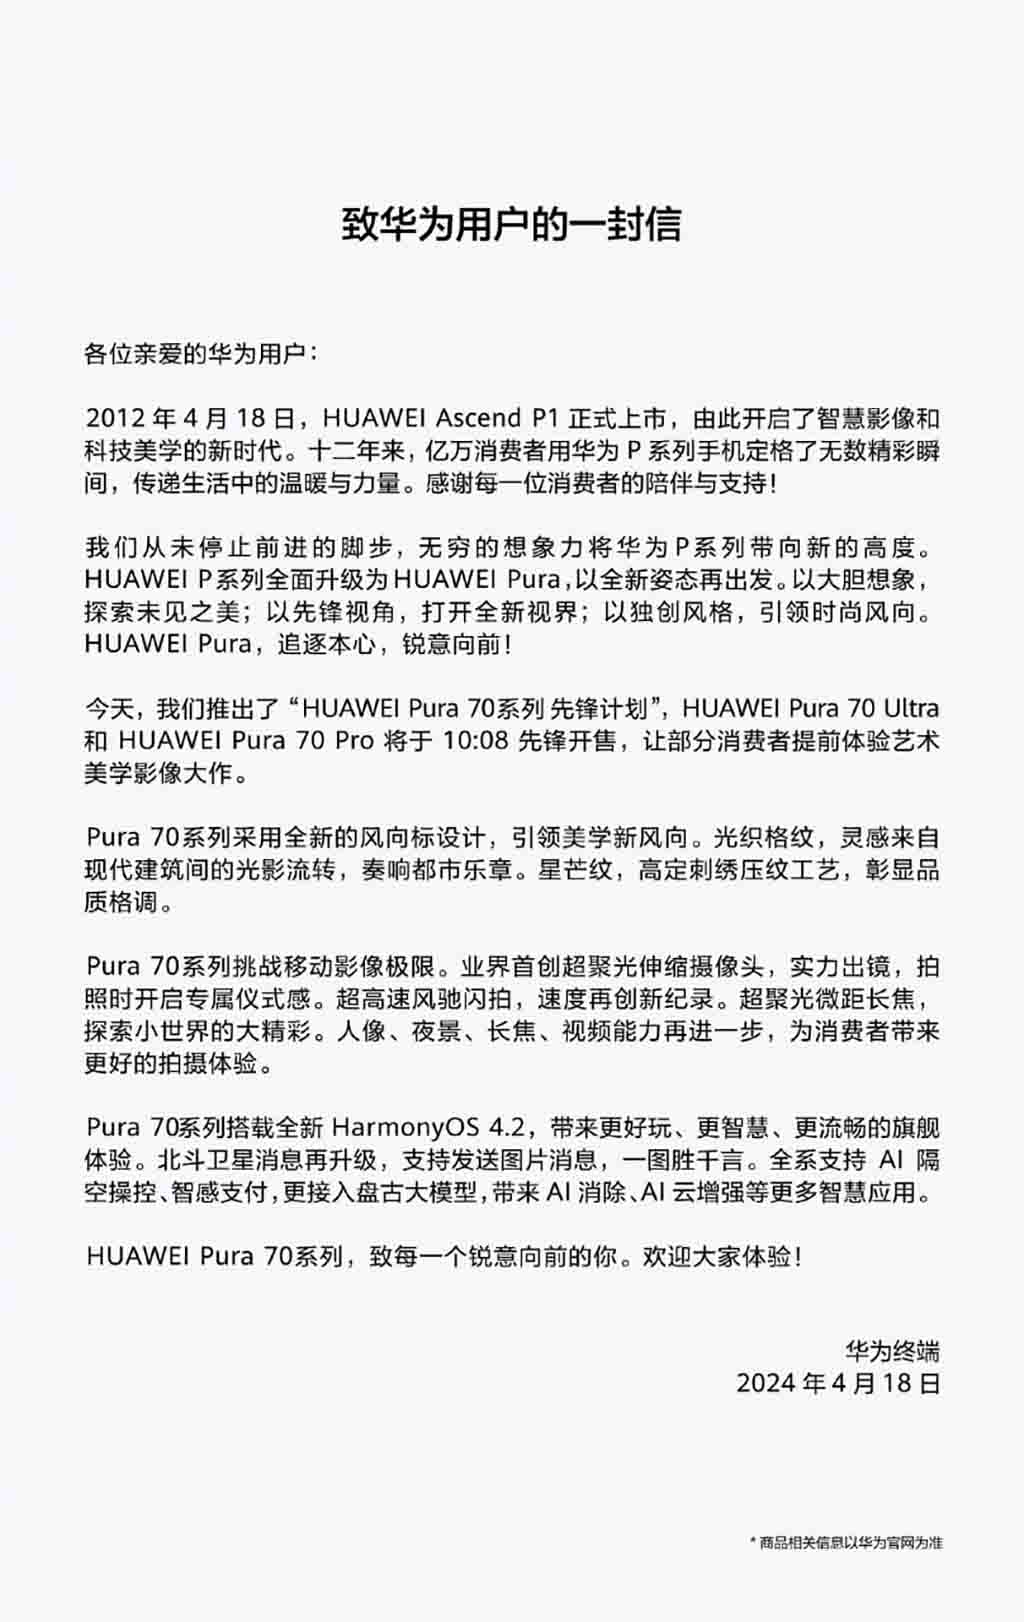 Программа пионеров серии Huawei Pura 70